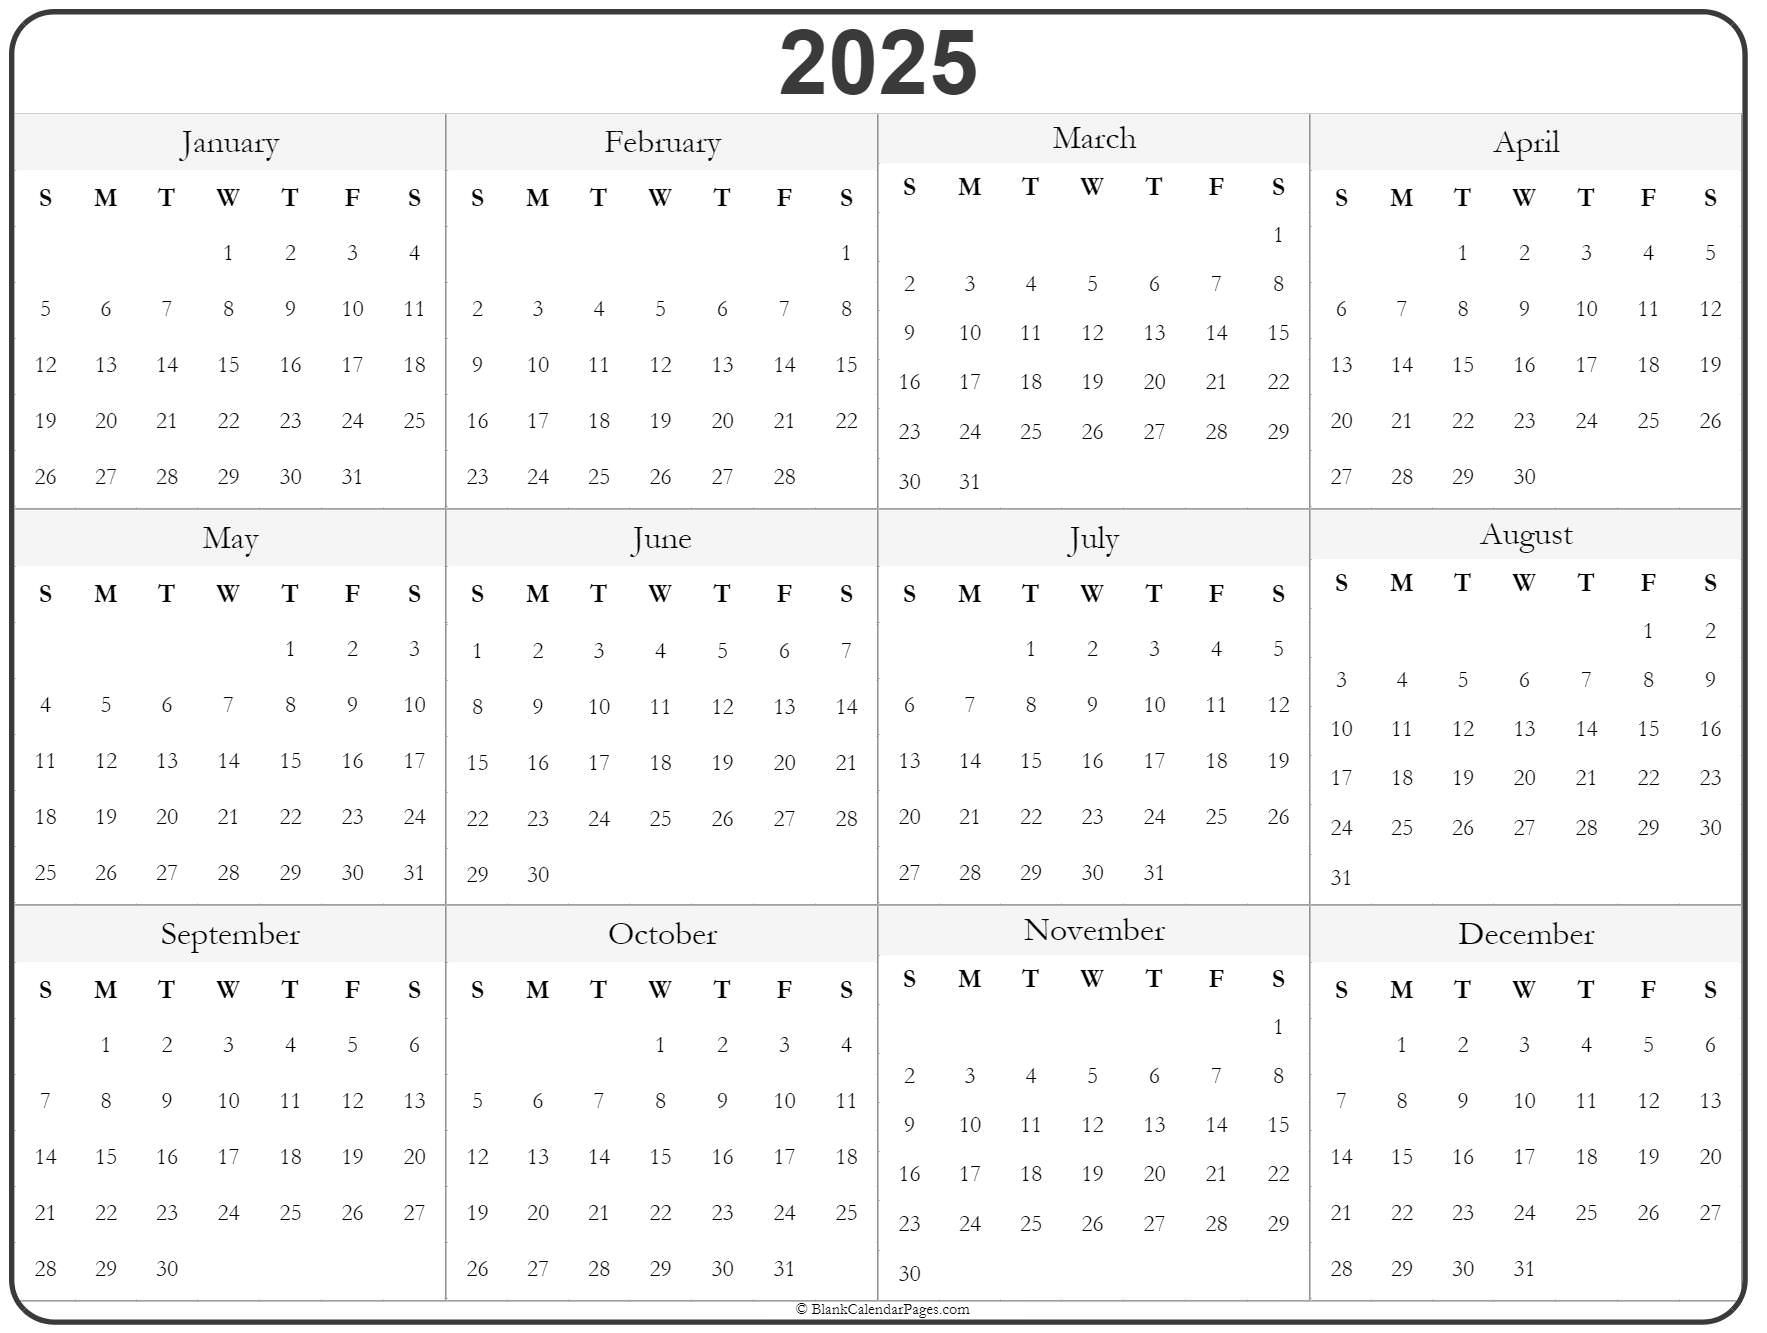 Officeworks 2025 Calendar 